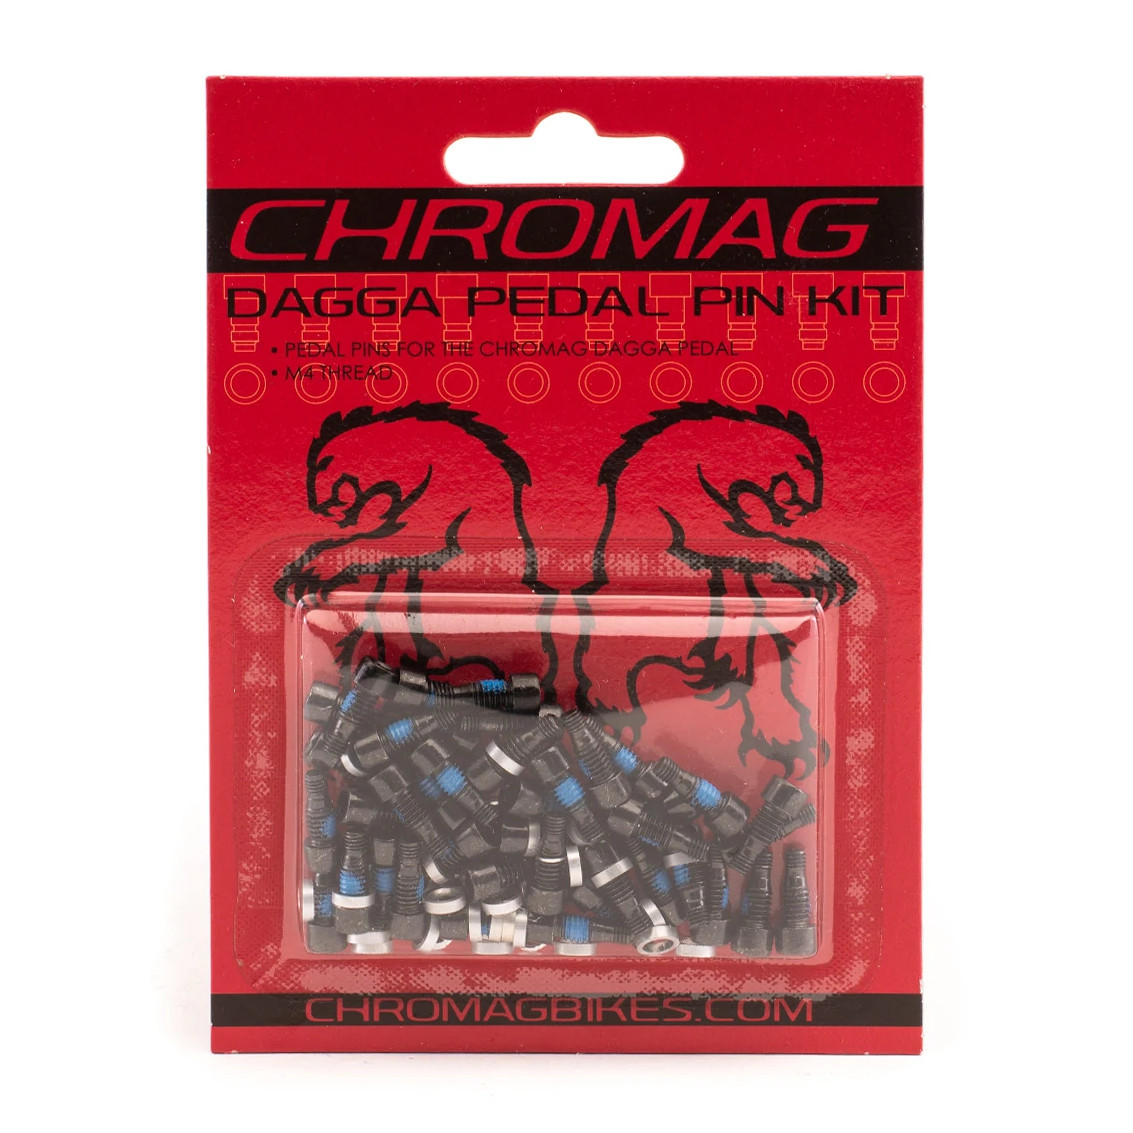 Productfoto van CHROMAG Pin Kit for Dagga Pedals - 40 Pieces - black